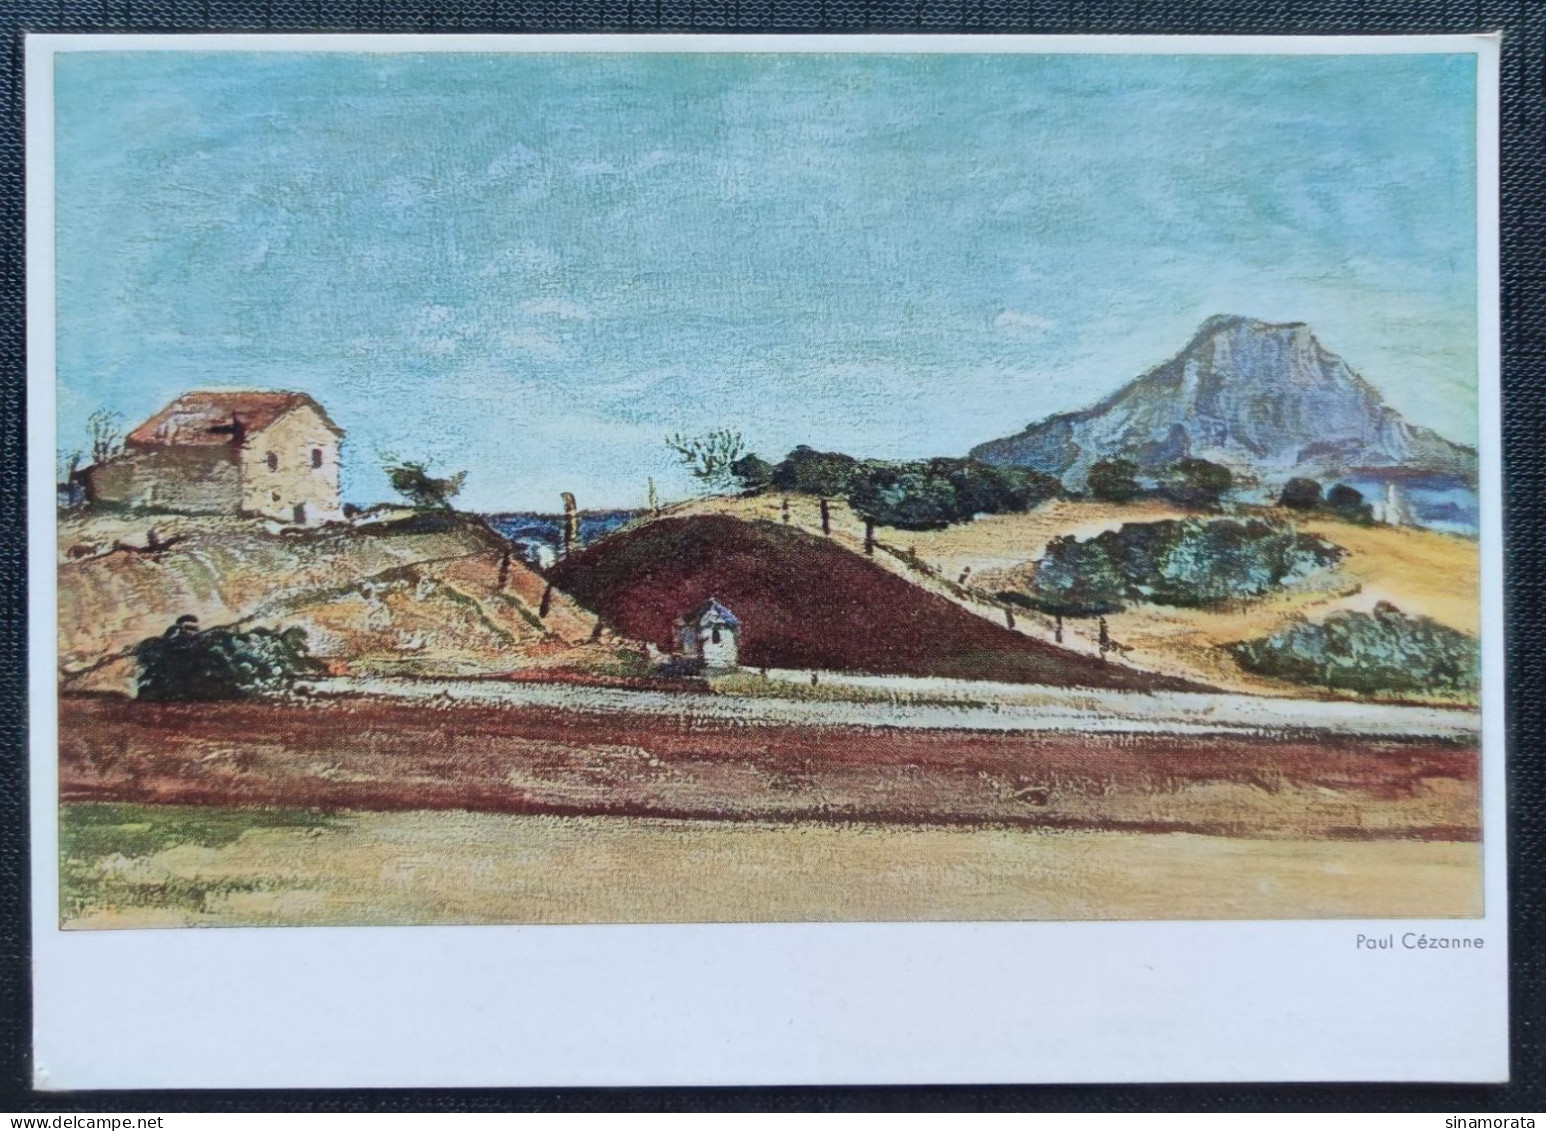 Paul Cezanne - Paintings. Railway Cutting - Paintings